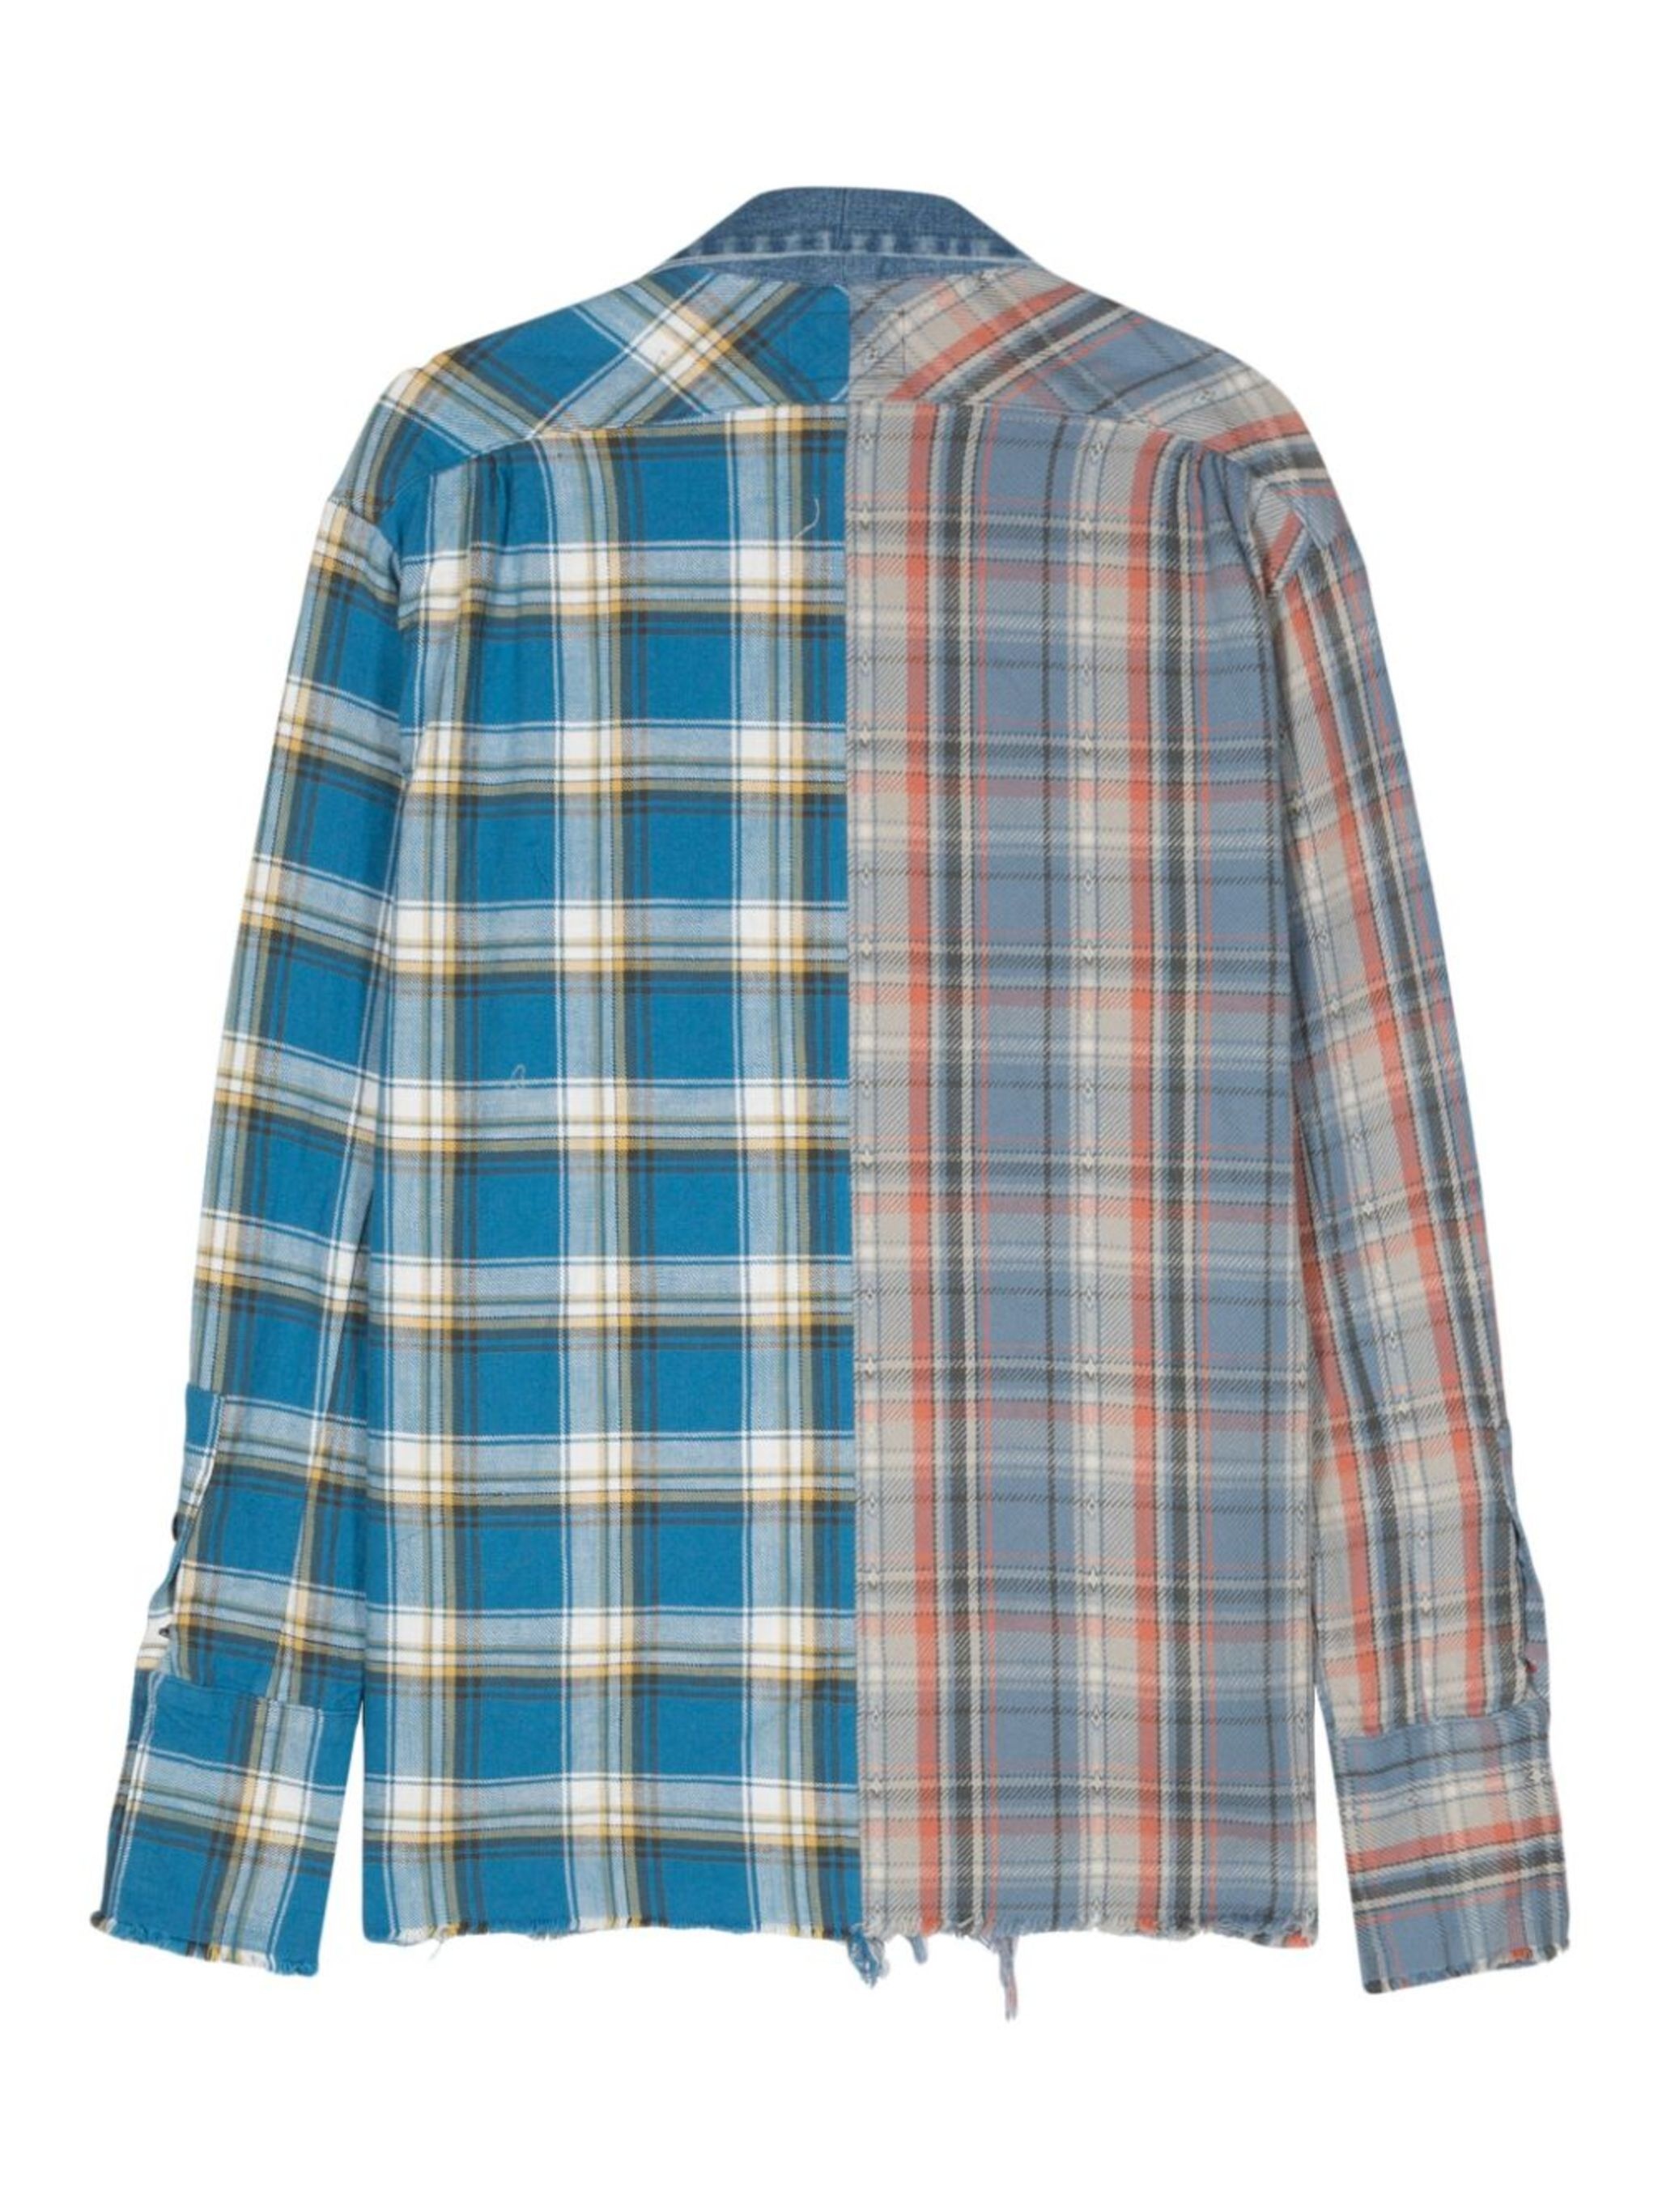 GL1 Mixed Plaid shirt jacket - 2